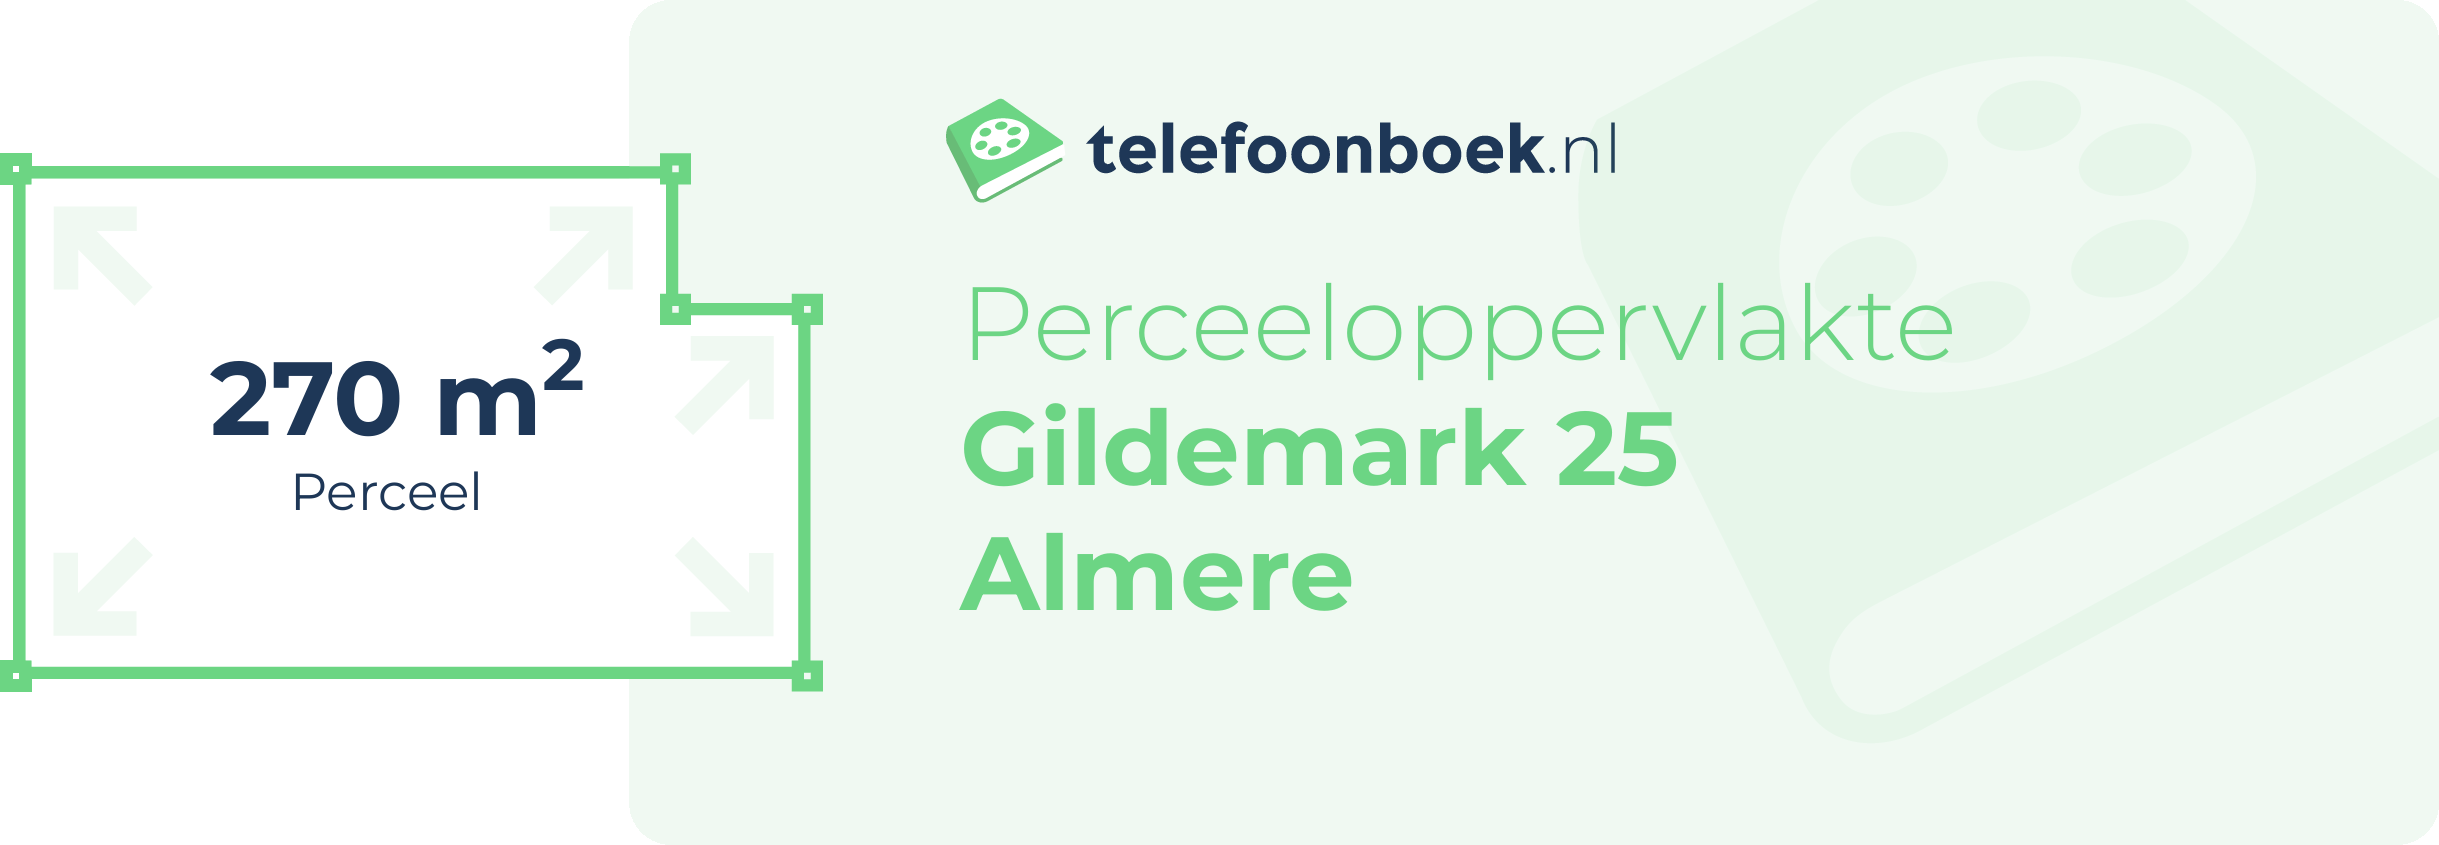 Perceeloppervlakte Gildemark 25 Almere